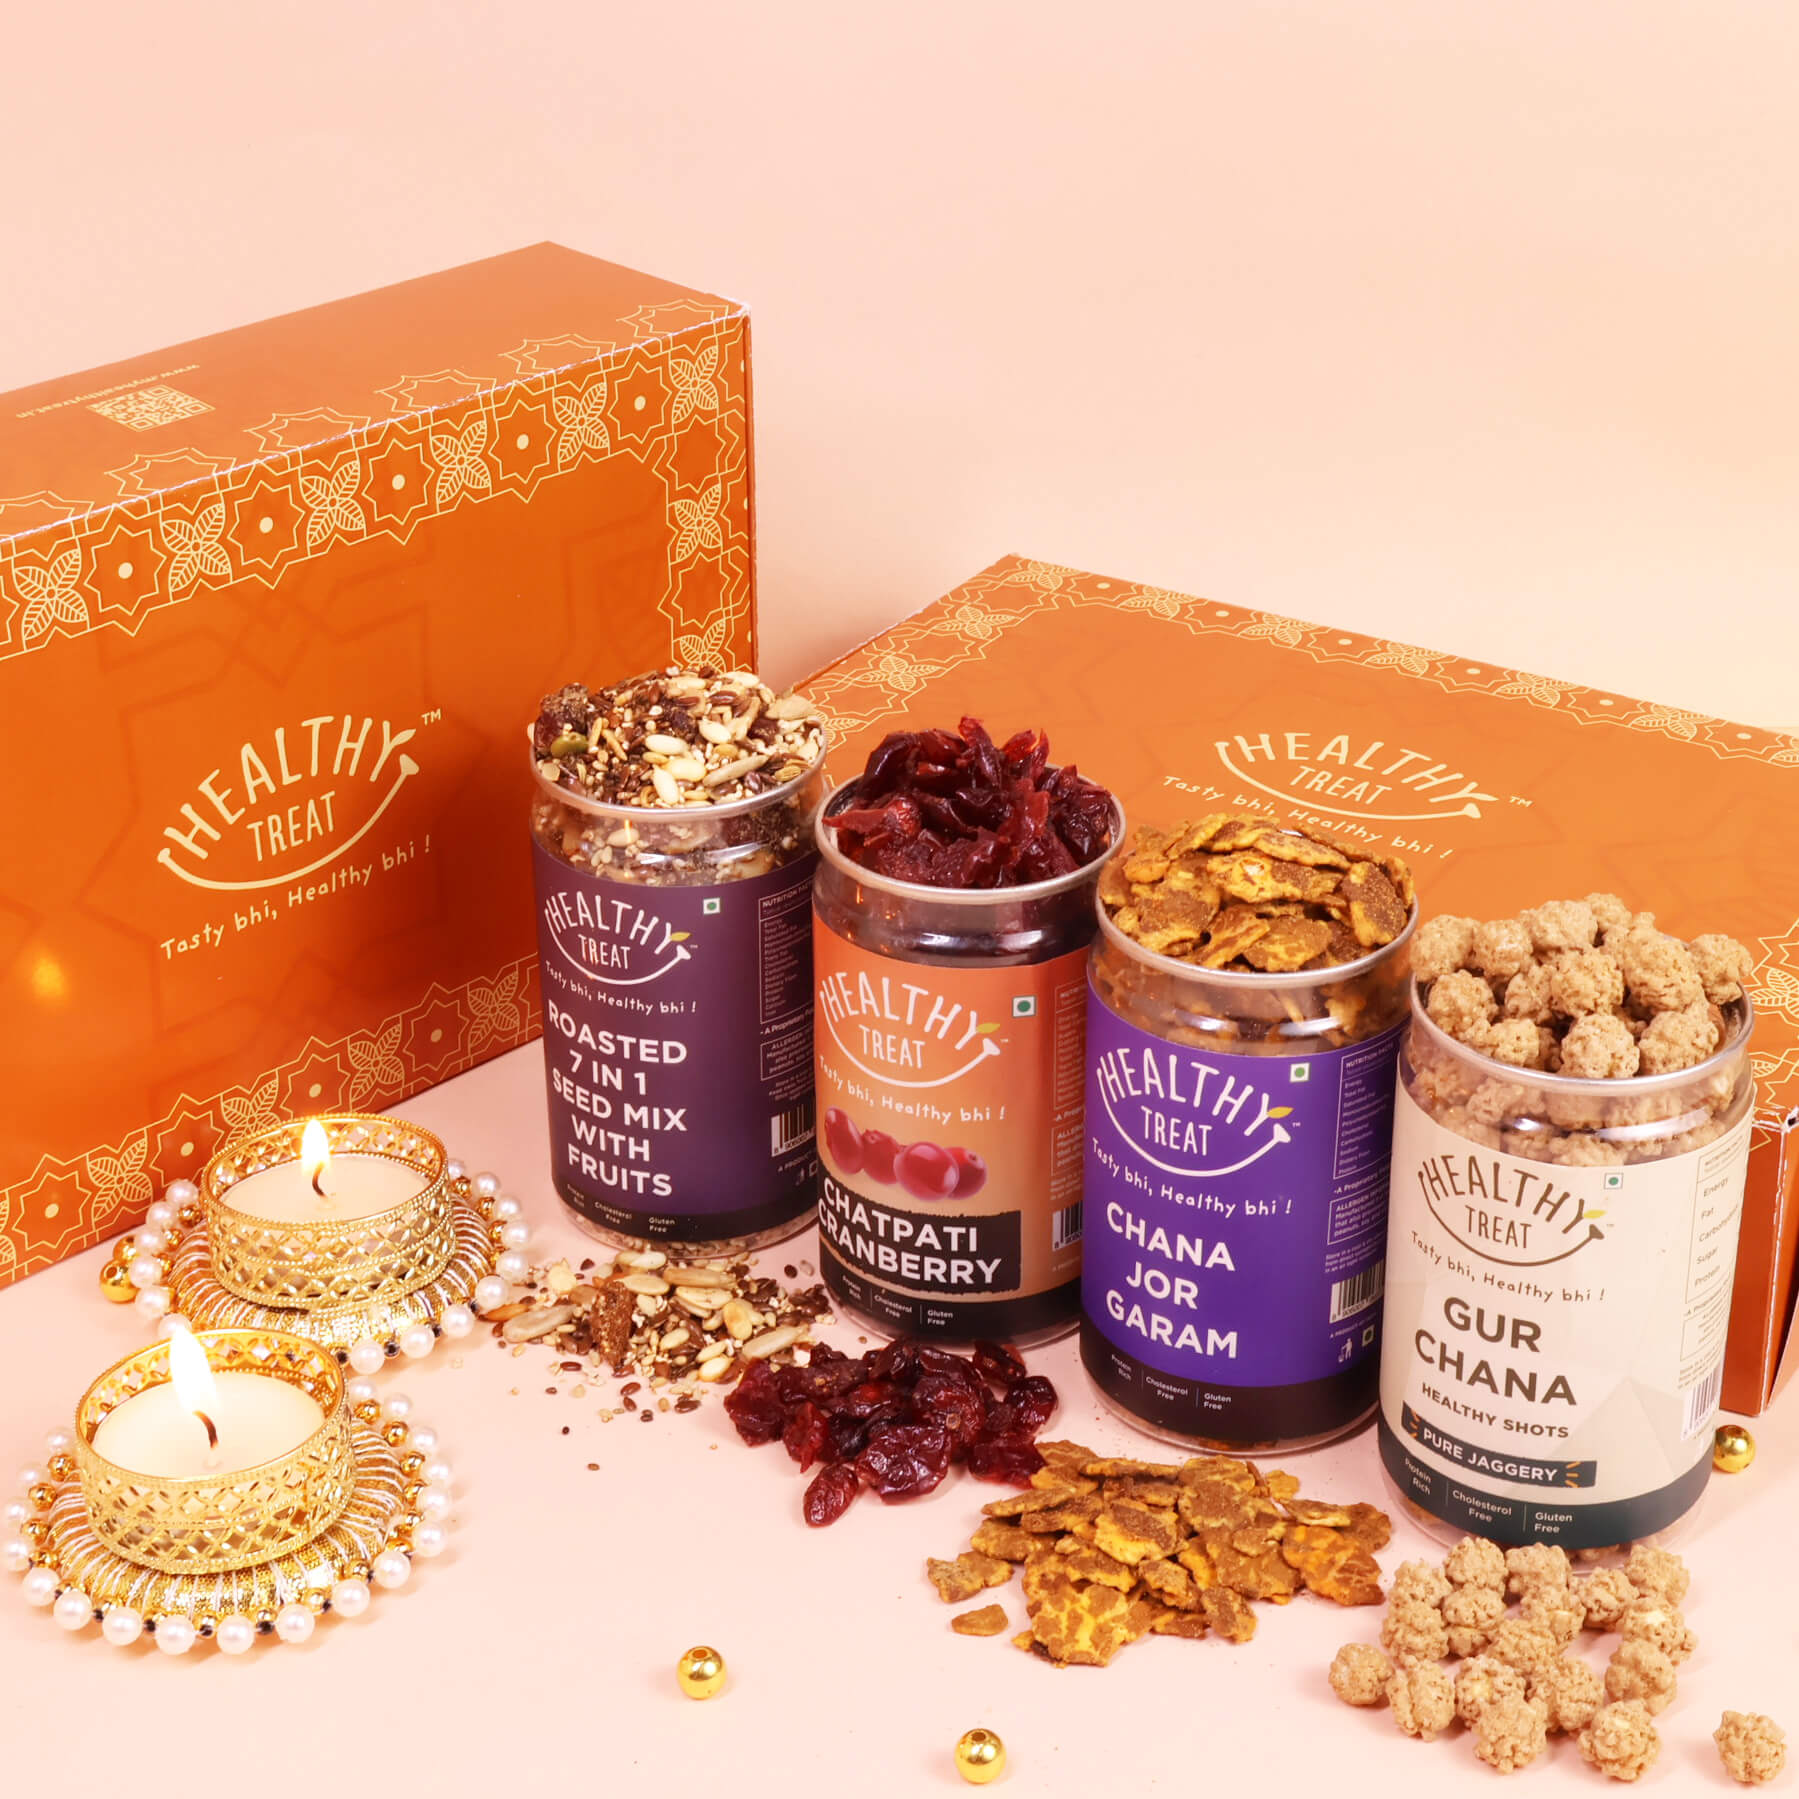 celebration diwali gift box